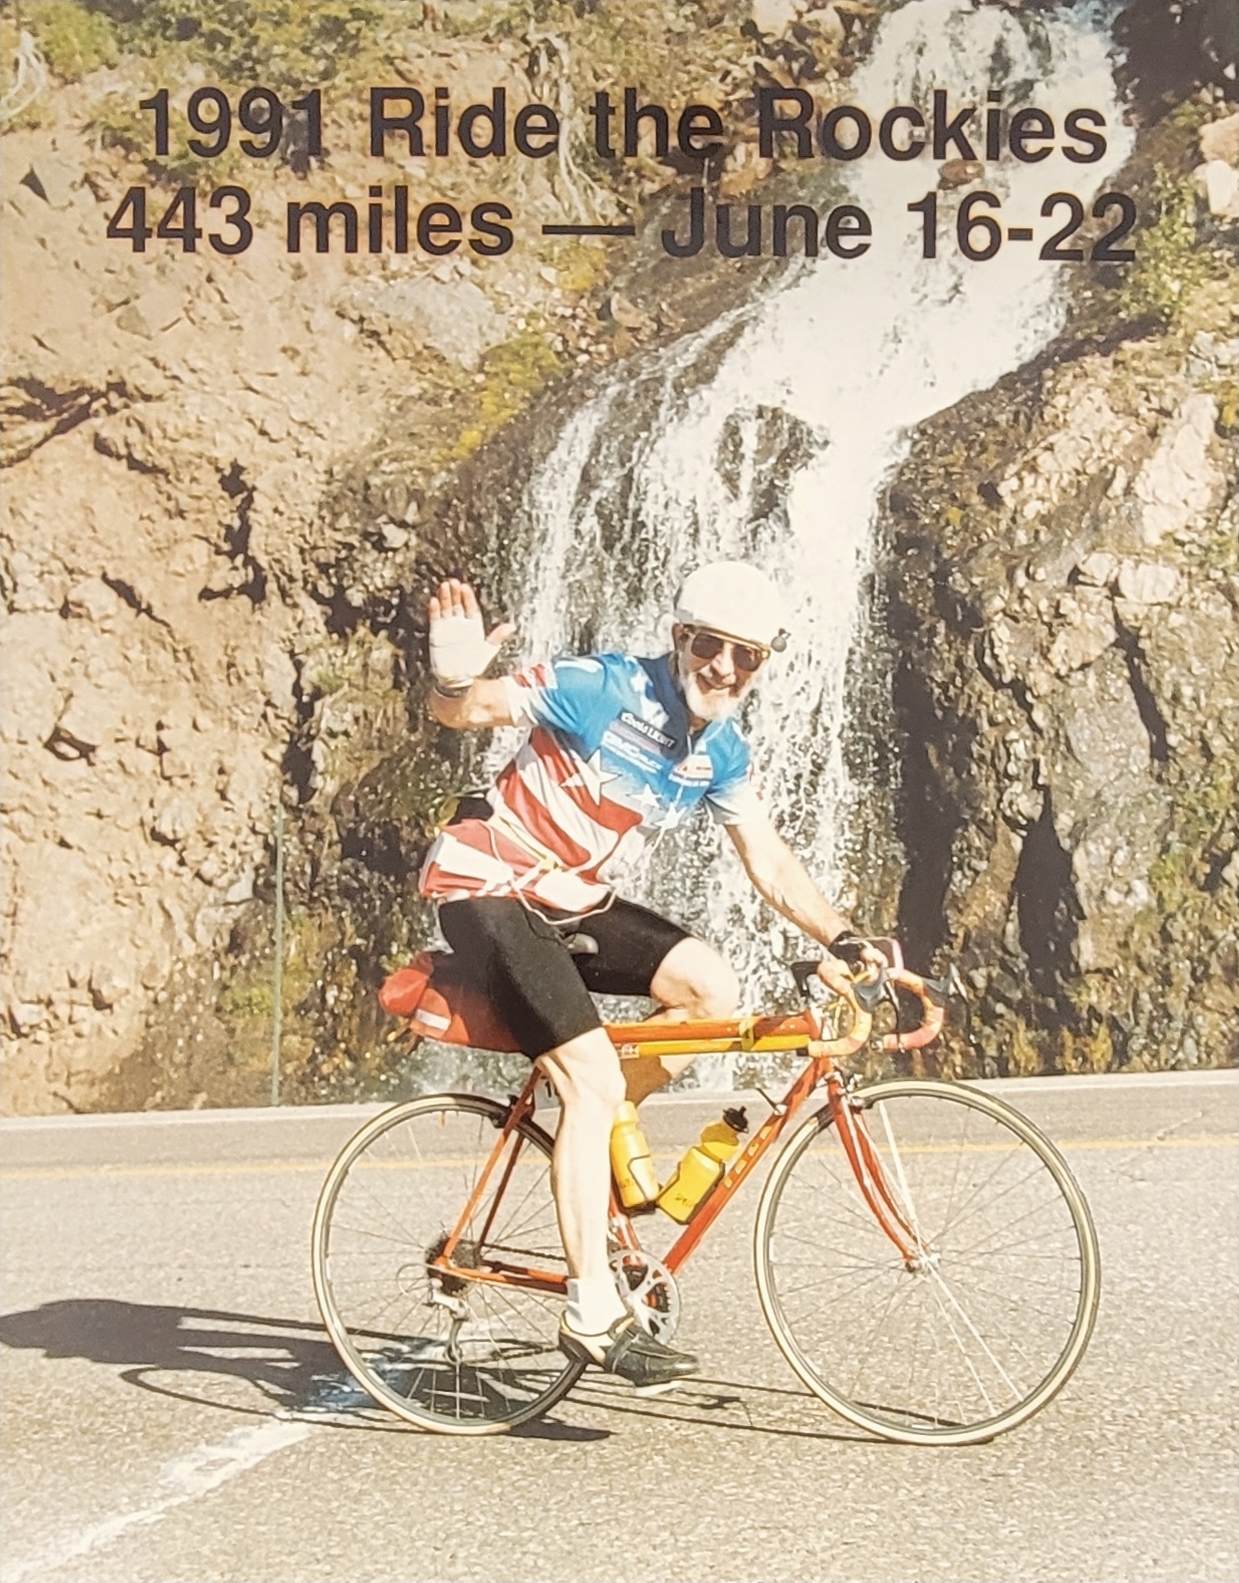 Colorado’s Ride the Rockies event in 1991